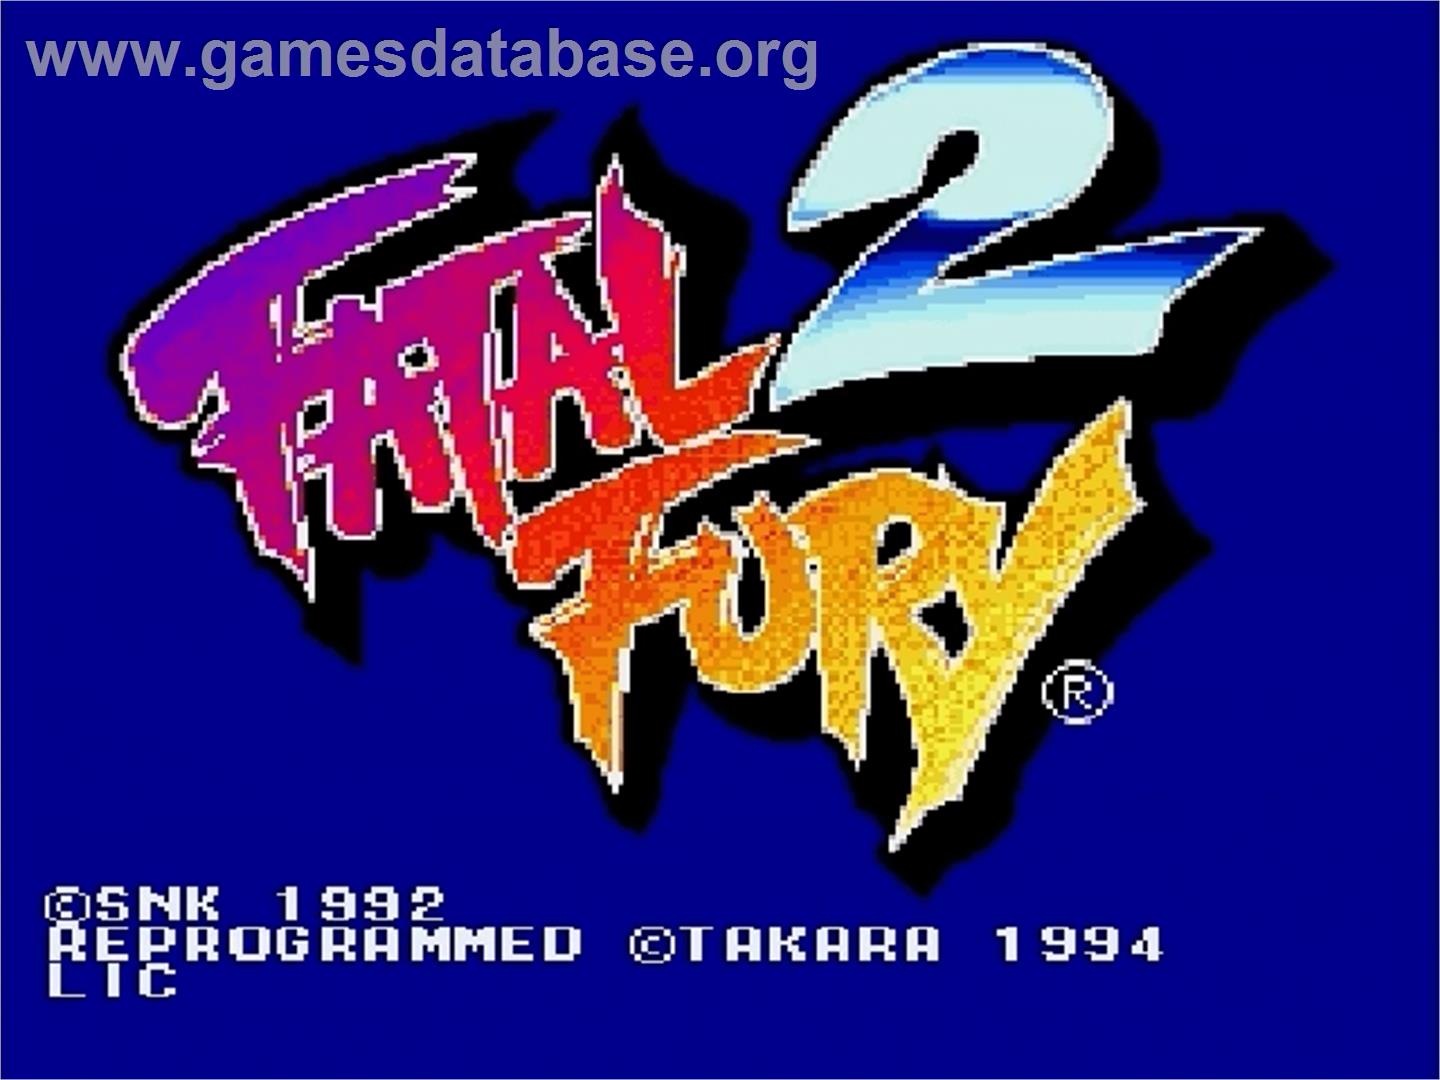 Fatal Fury 2 / Garou Densetsu 2 - arata-naru tatakai - Sega Genesis - Artwork - Title Screen